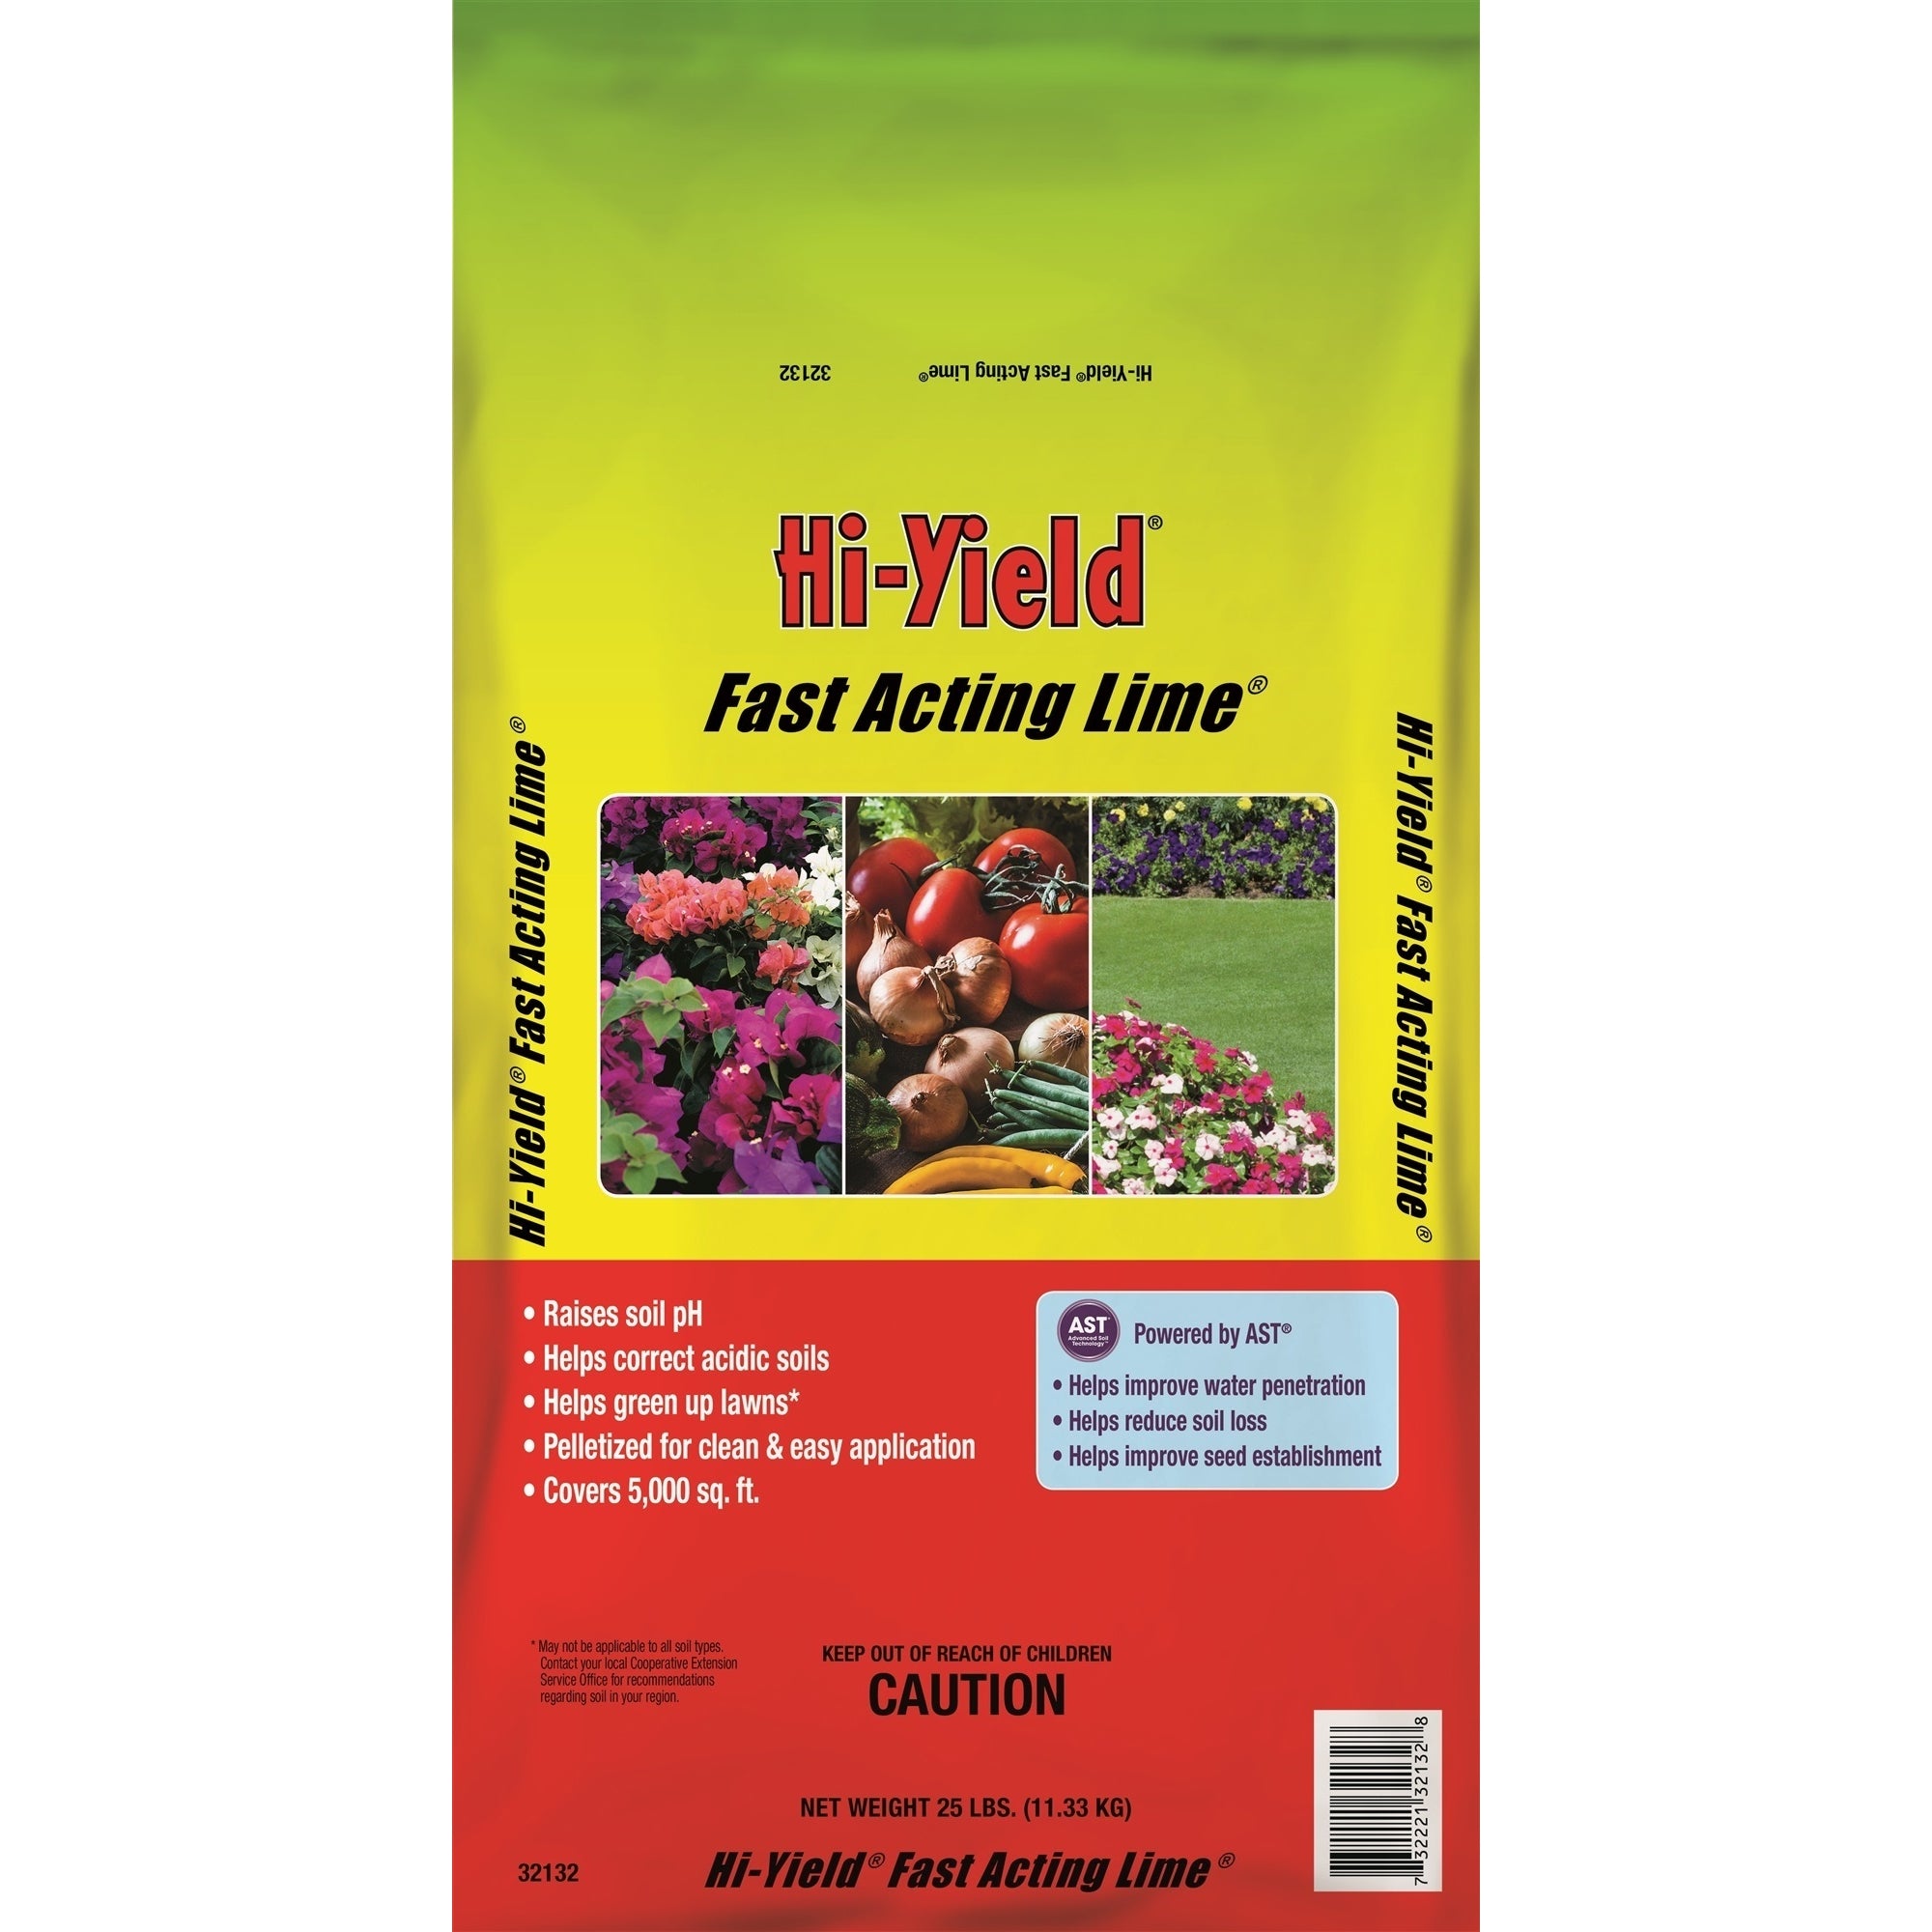 VPG Fertilome Hi-Yield Fast Acting Lime Soil